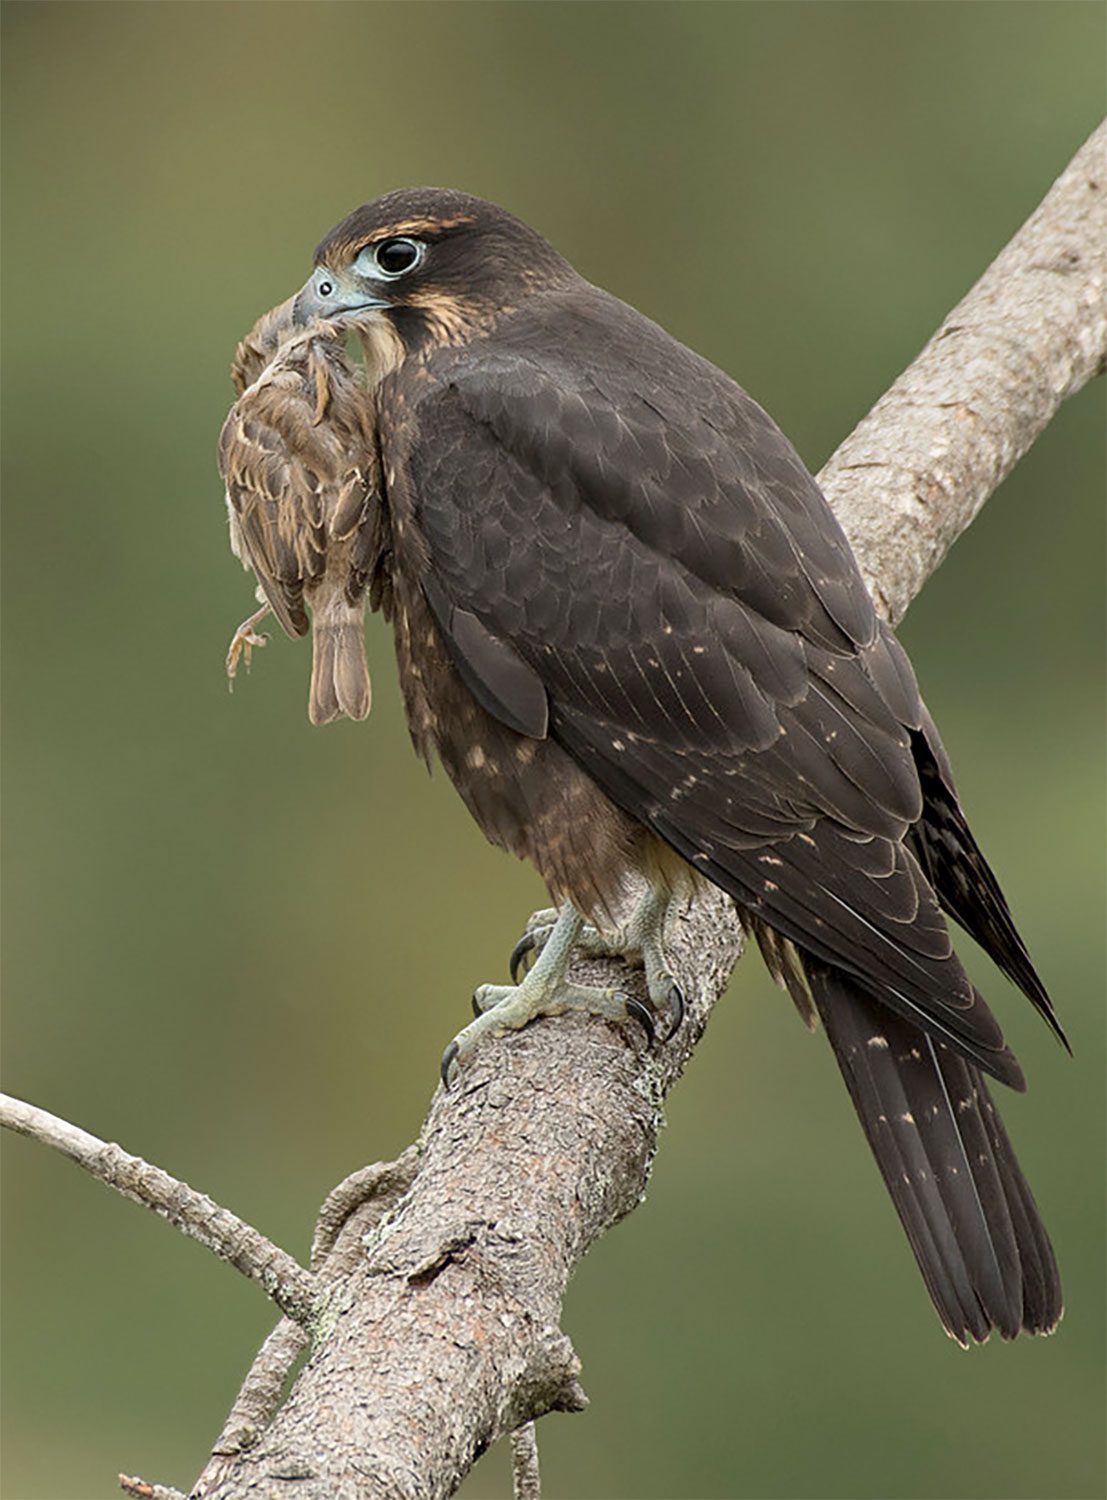 New Zealand Falcon preys on an invasive House Sparrow. Photo by mikullashbee via Birdshare.